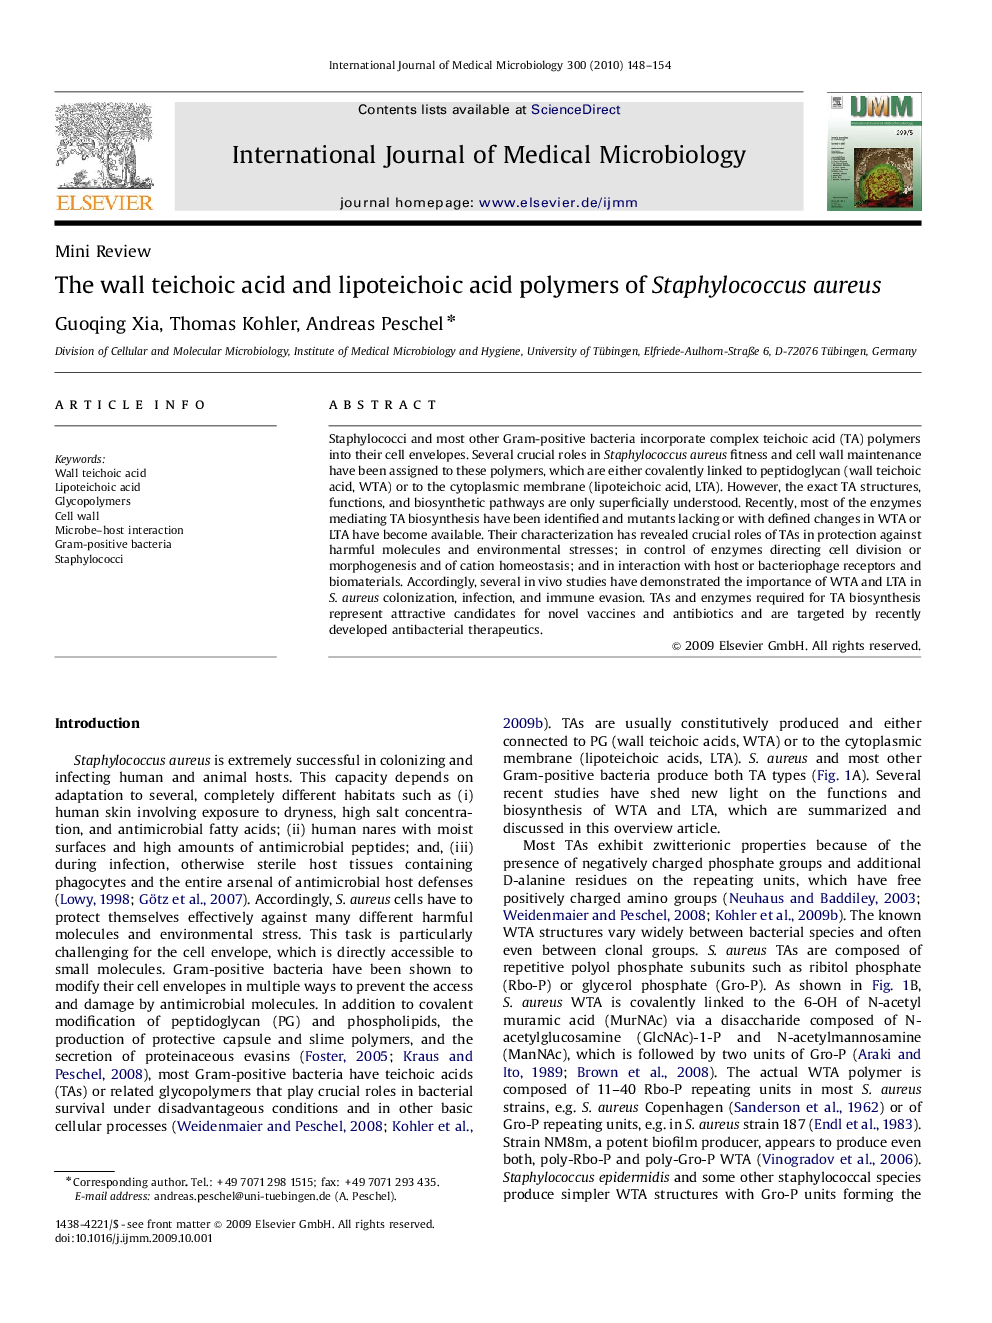 The wall teichoic acid and lipoteichoic acid polymers of Staphylococcus aureus